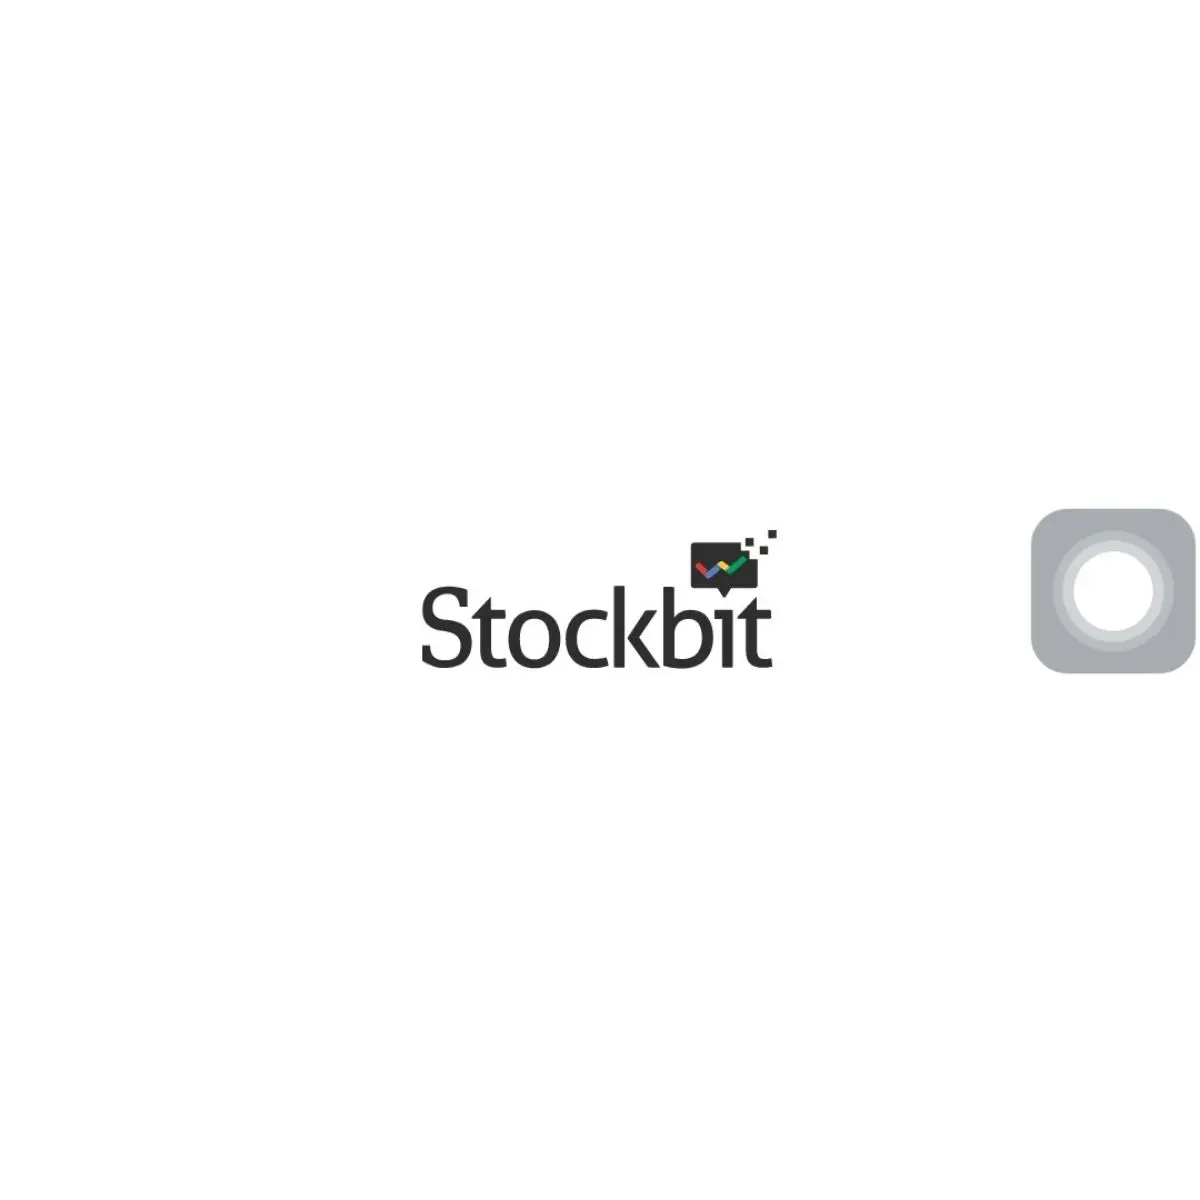 stockbit